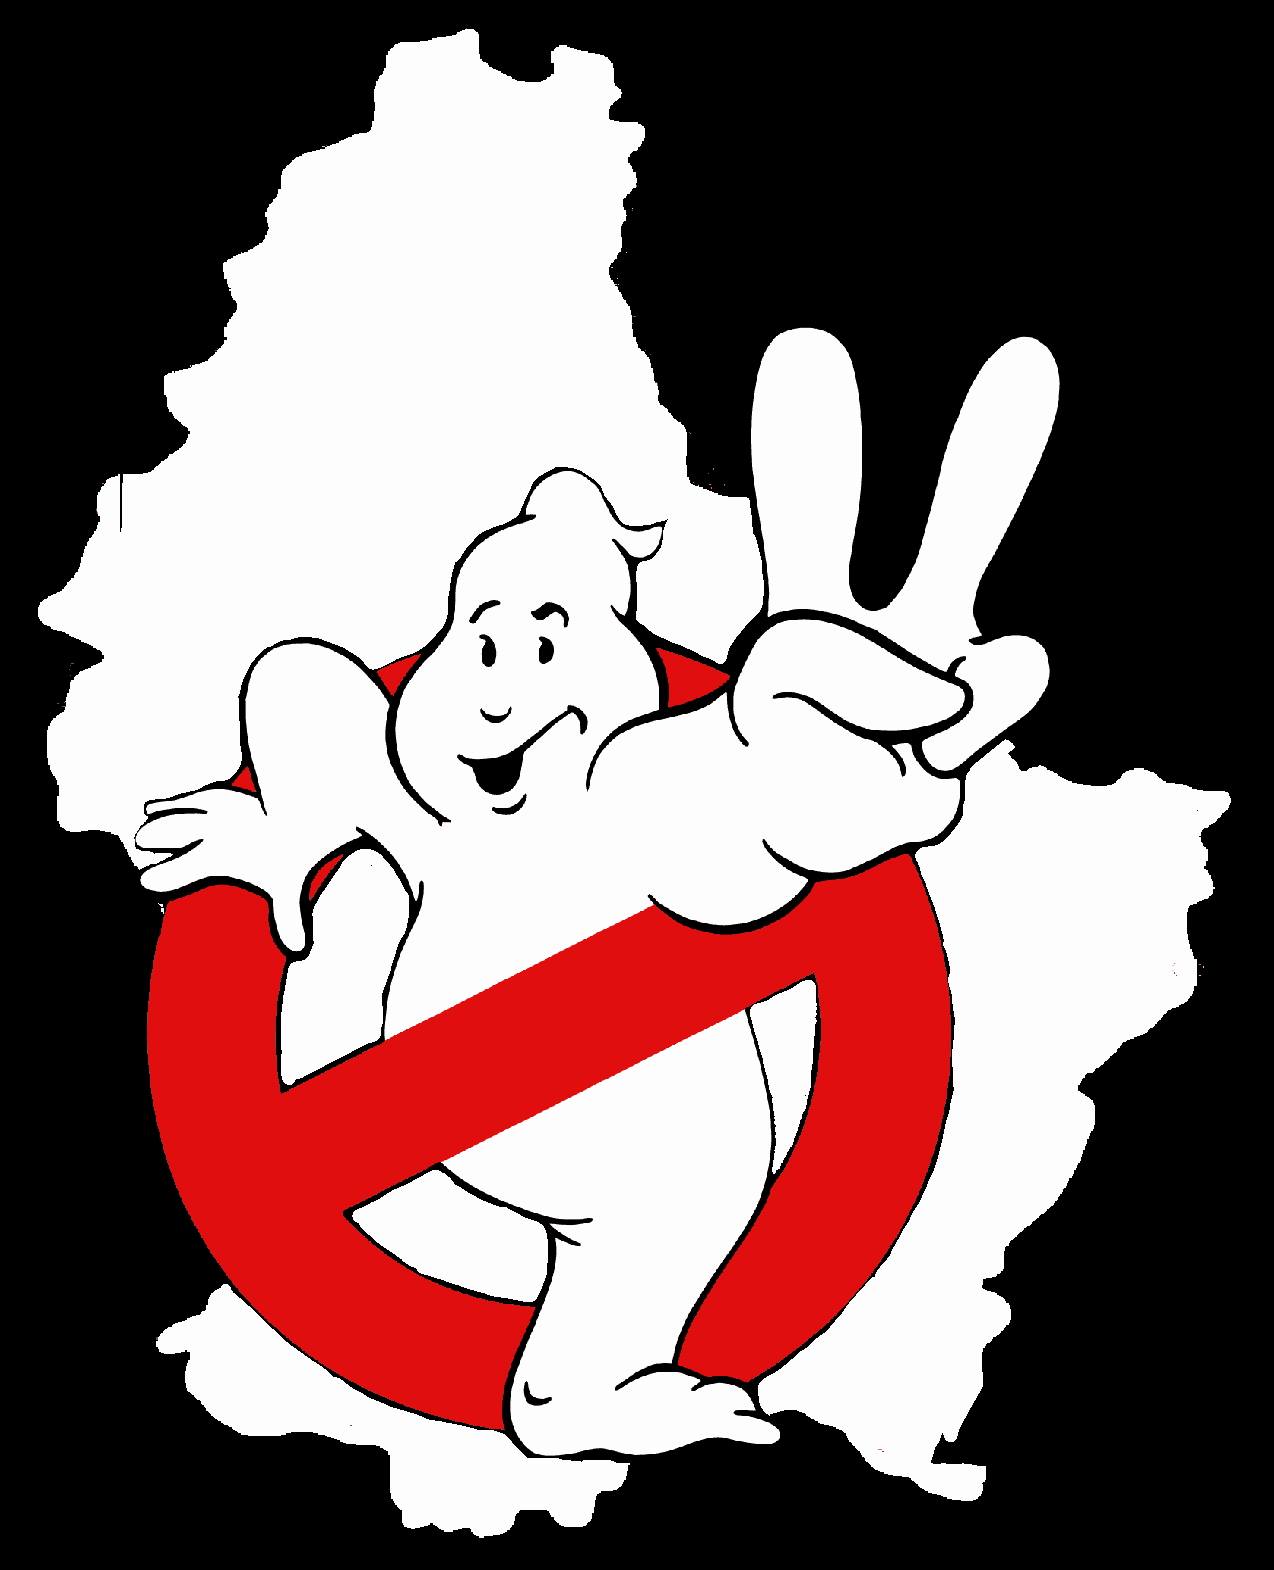 ghostbusters 2 logo vector